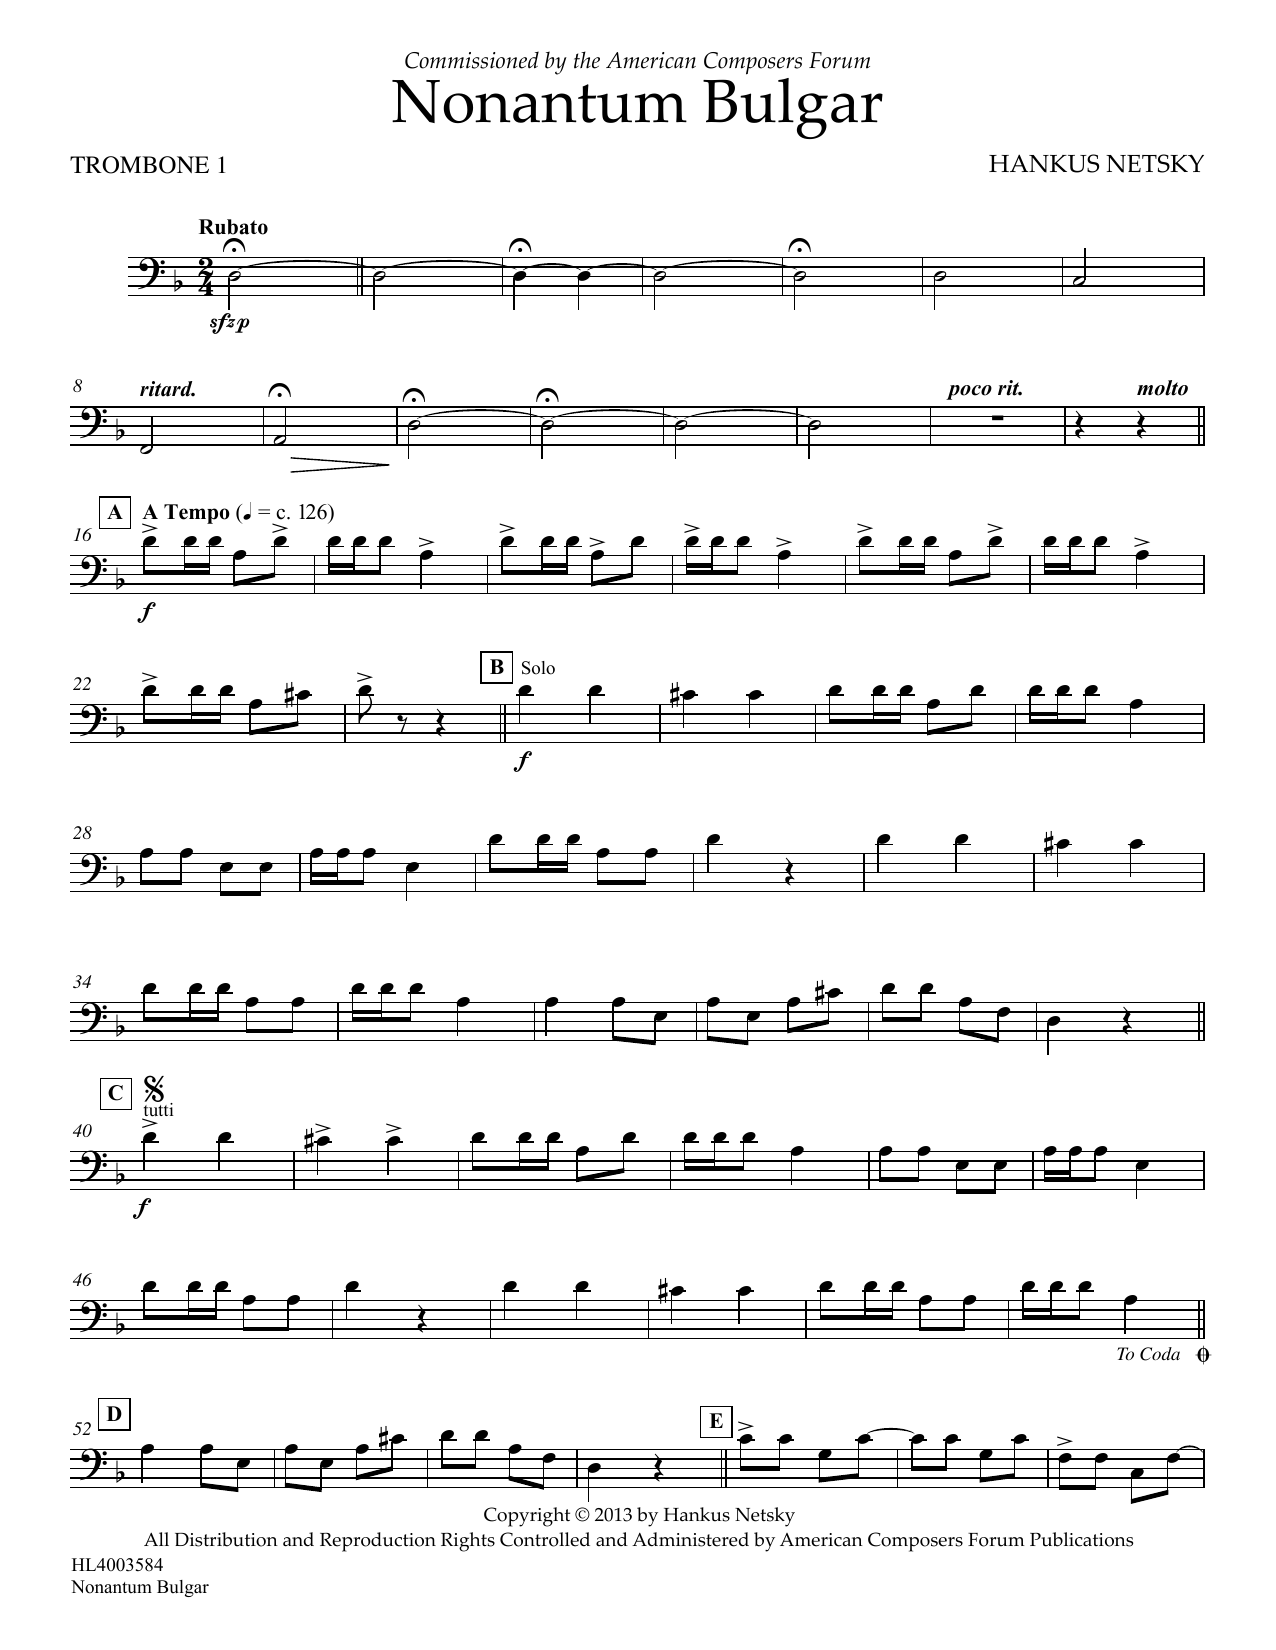 Download Hankus Netsky Nonantum Bulgar - Trombone 1 Sheet Music